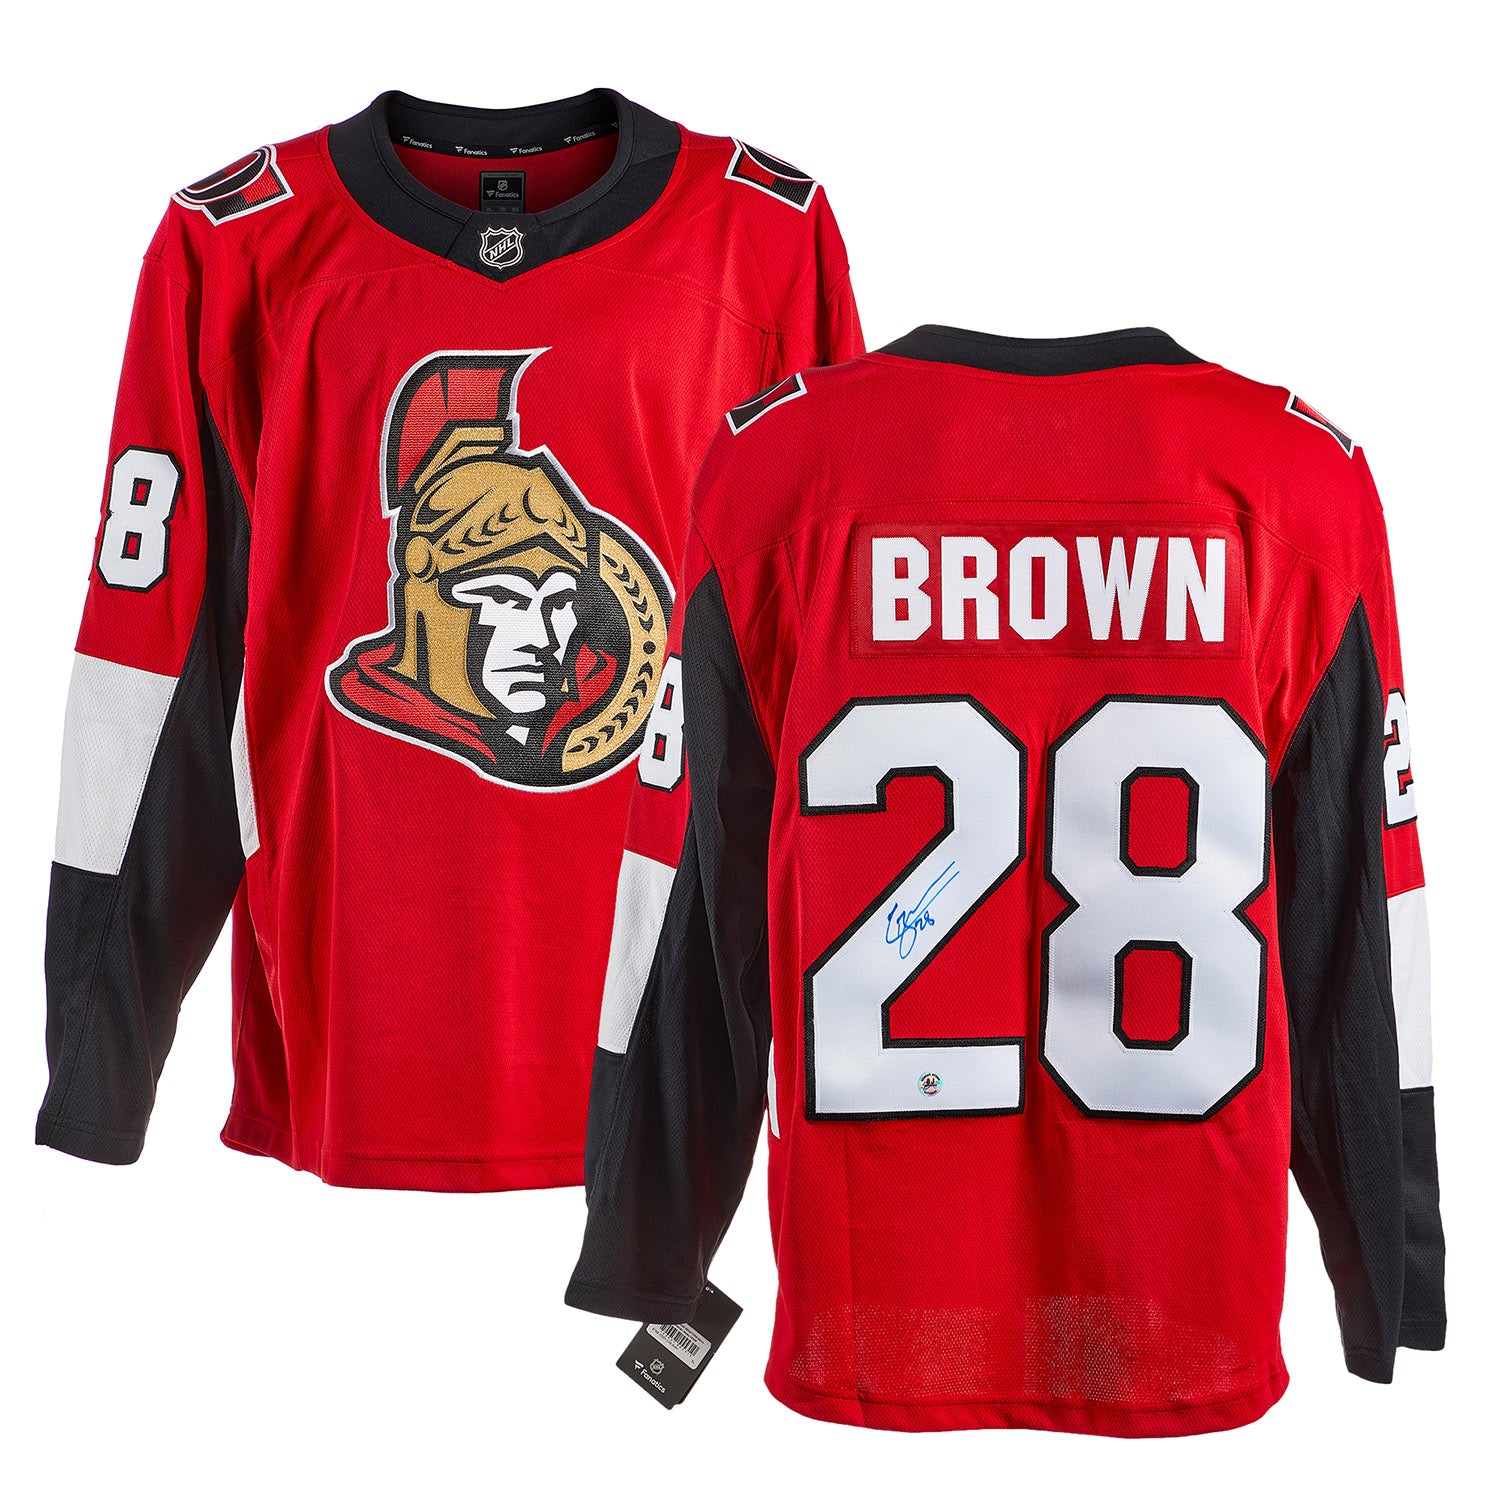 Connor Brown Ottawa Senators Autographed Fanatics Jersey